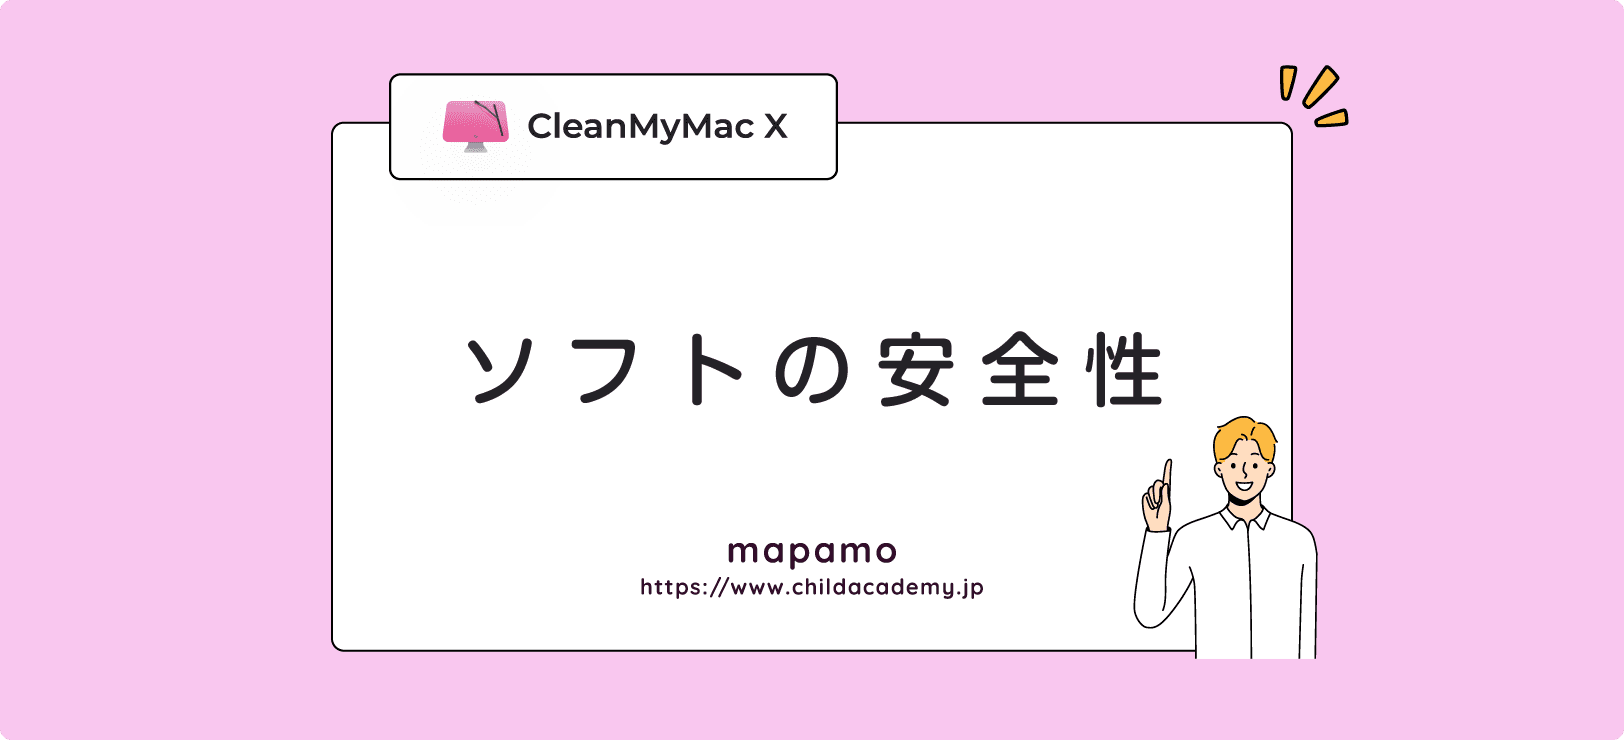 CleanMyMac Xの安全性